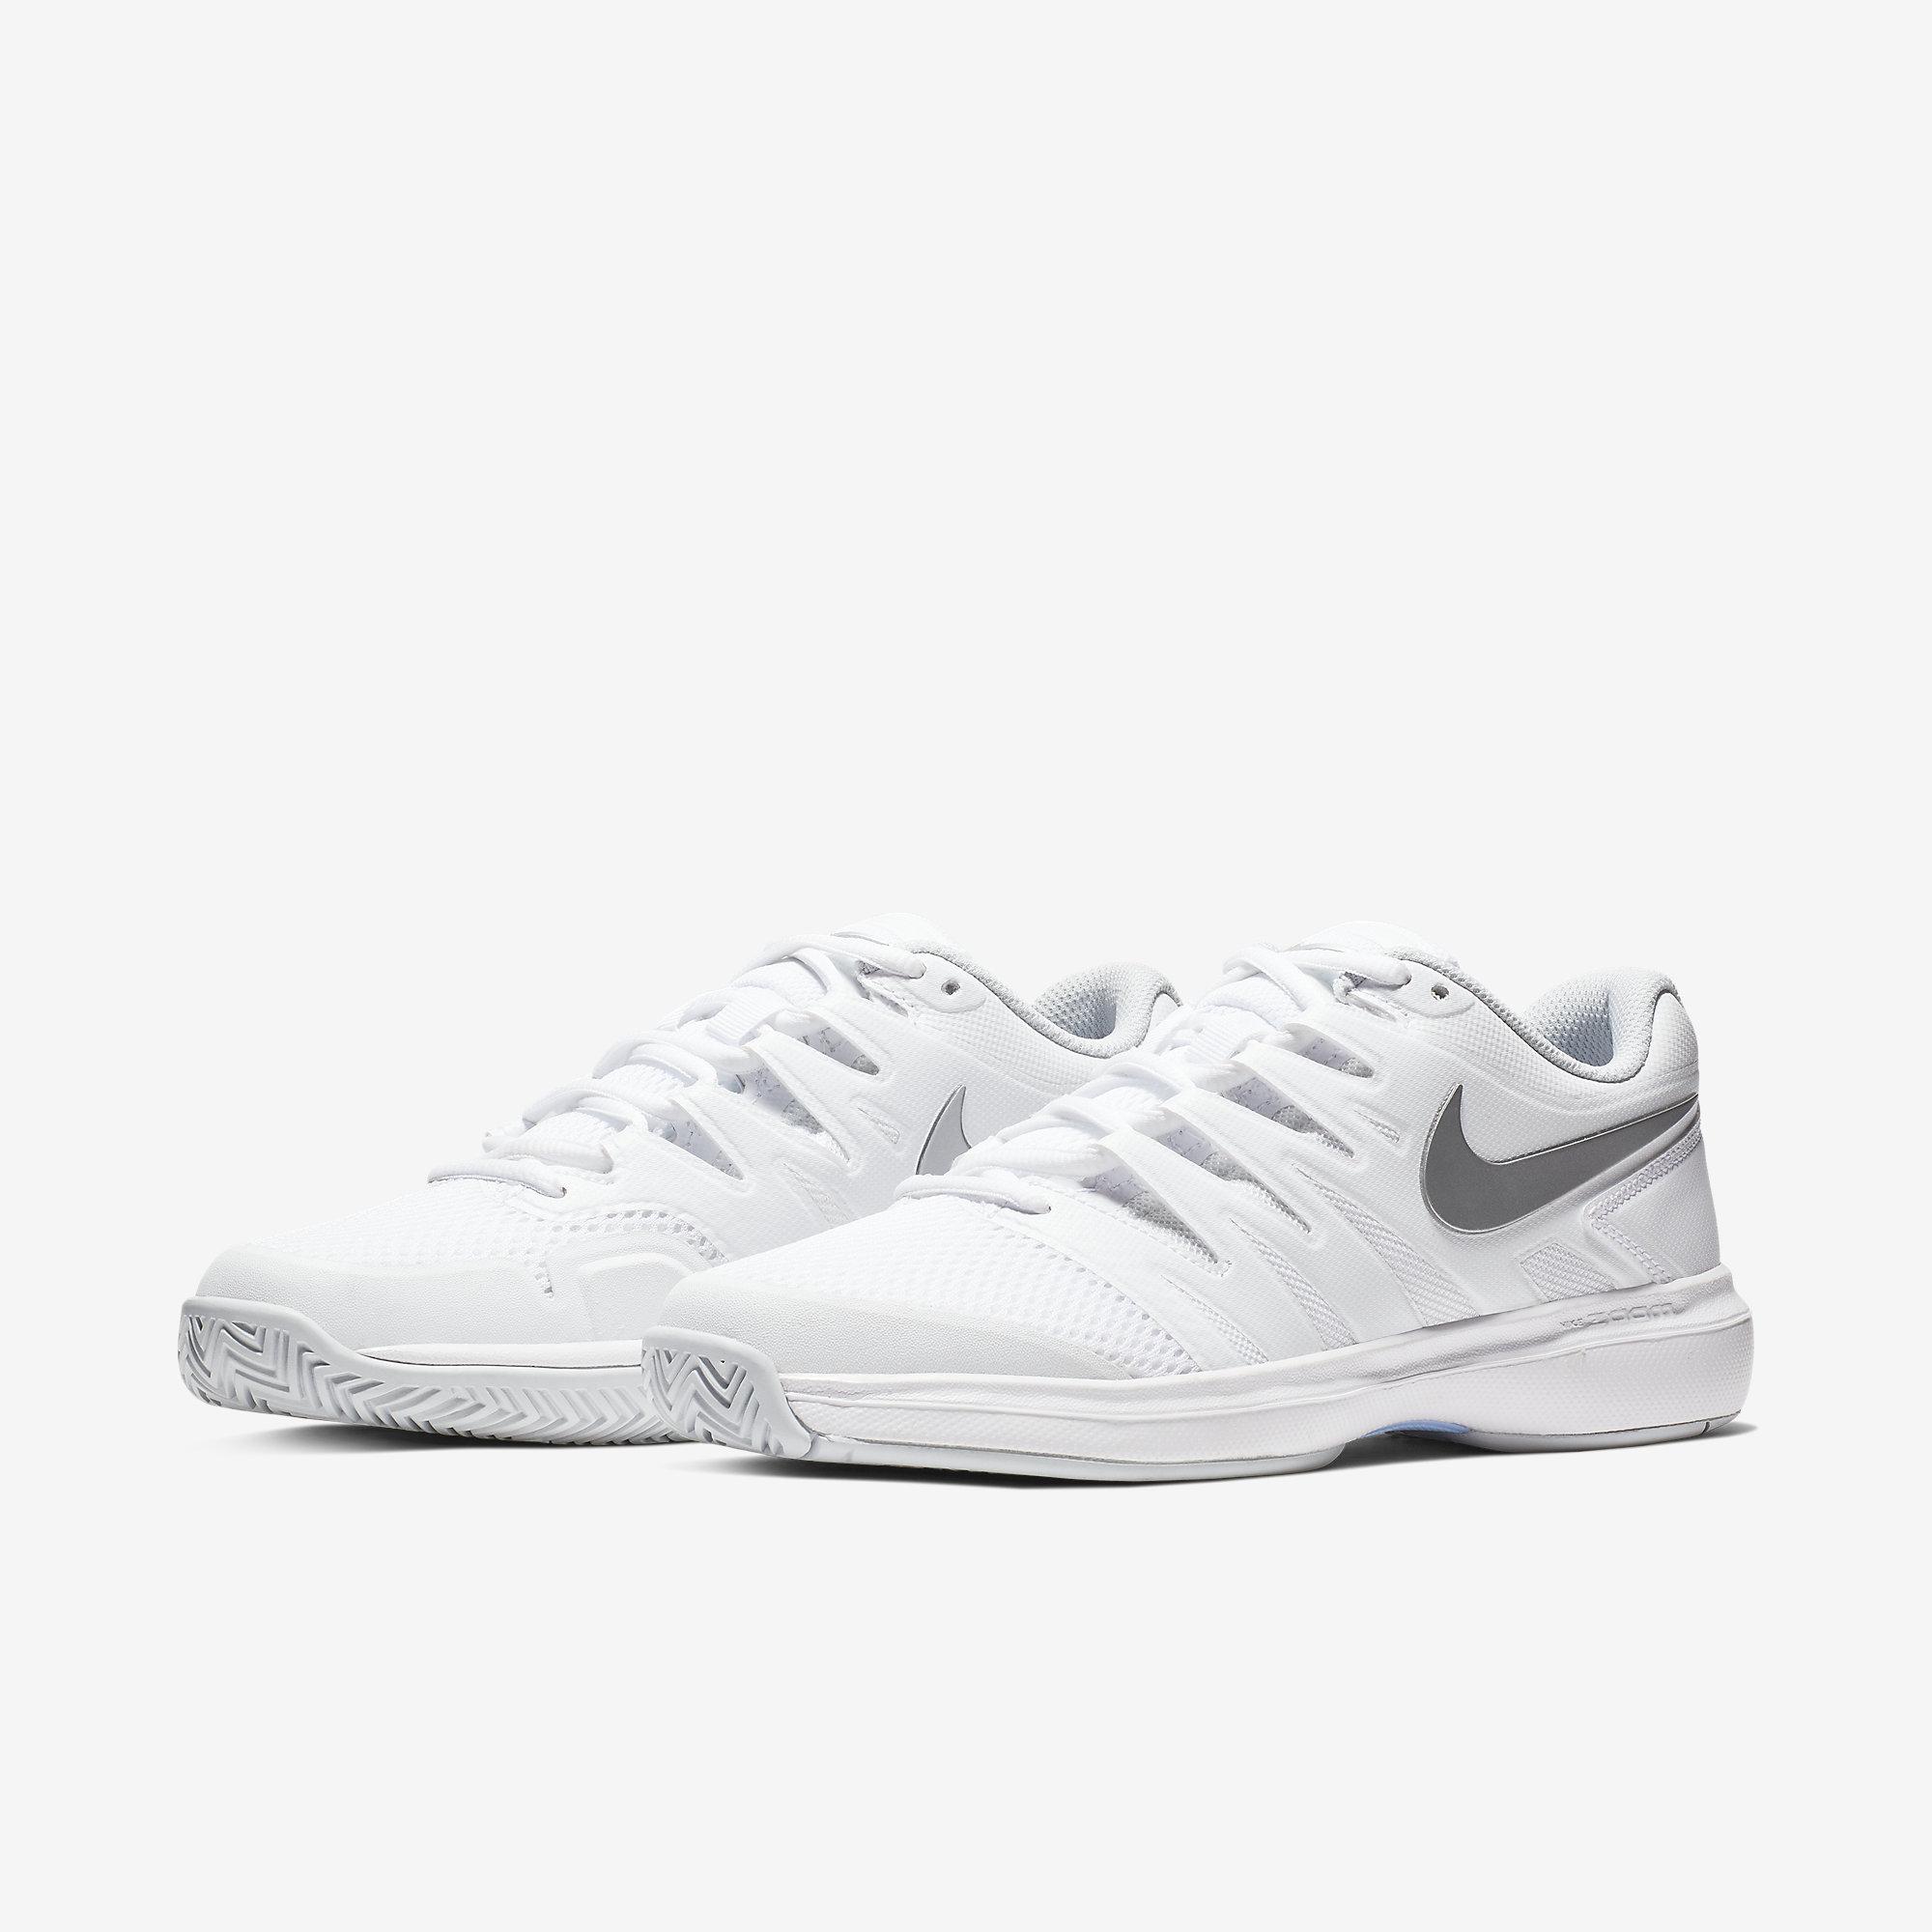 Nike Womens Air Zoom Prestige Tennis Shoes - White/Silver - Tennisnuts.com